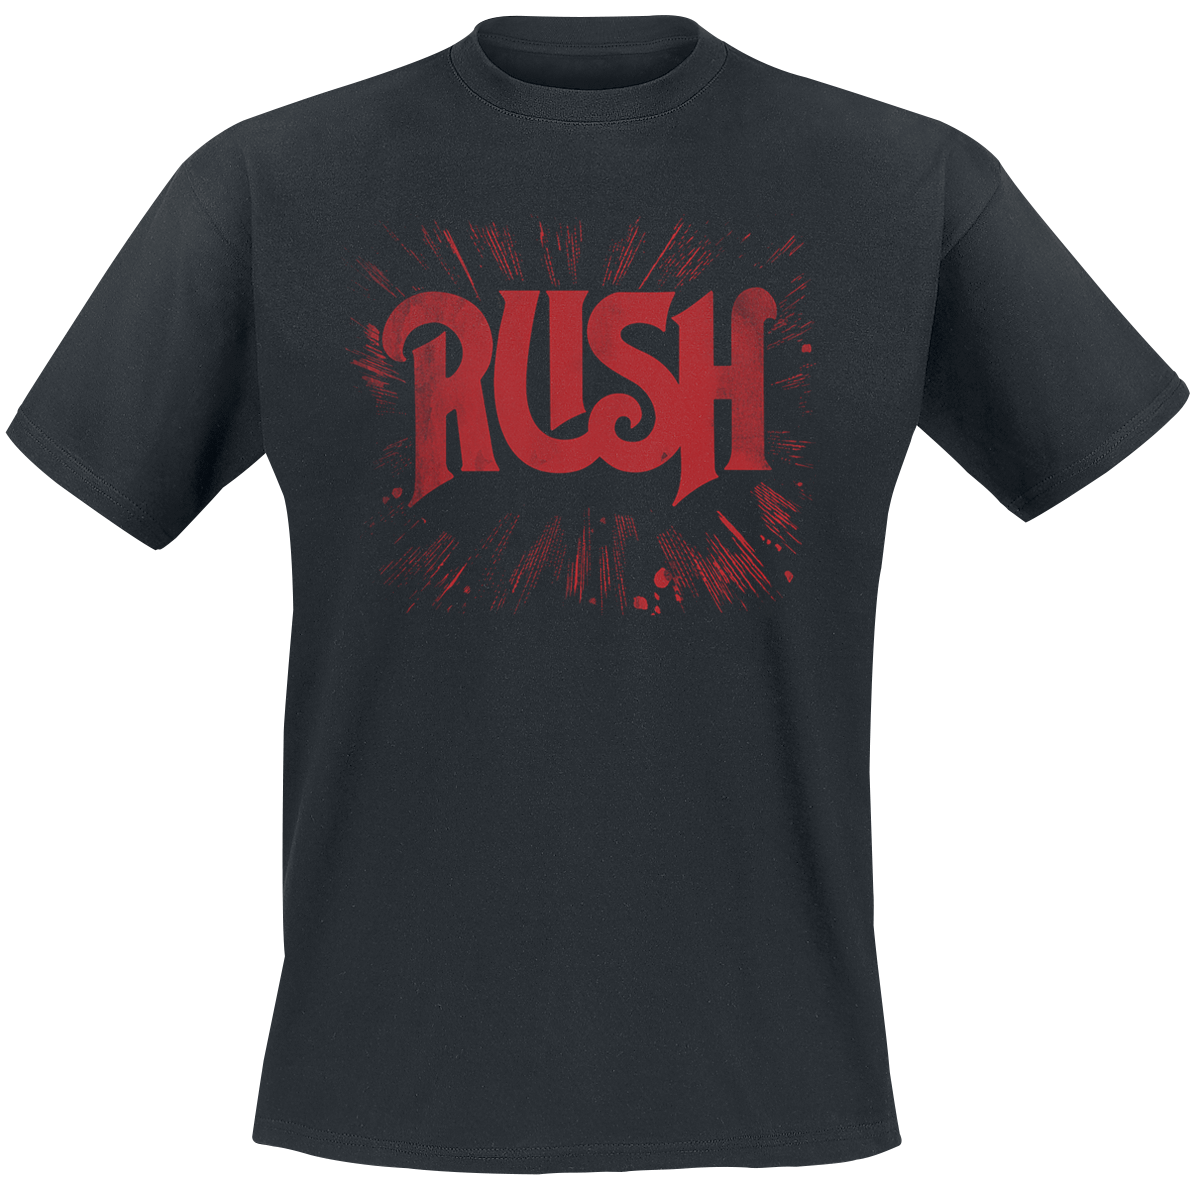 Rush - Roll the bones - T-Shirt - schwarz